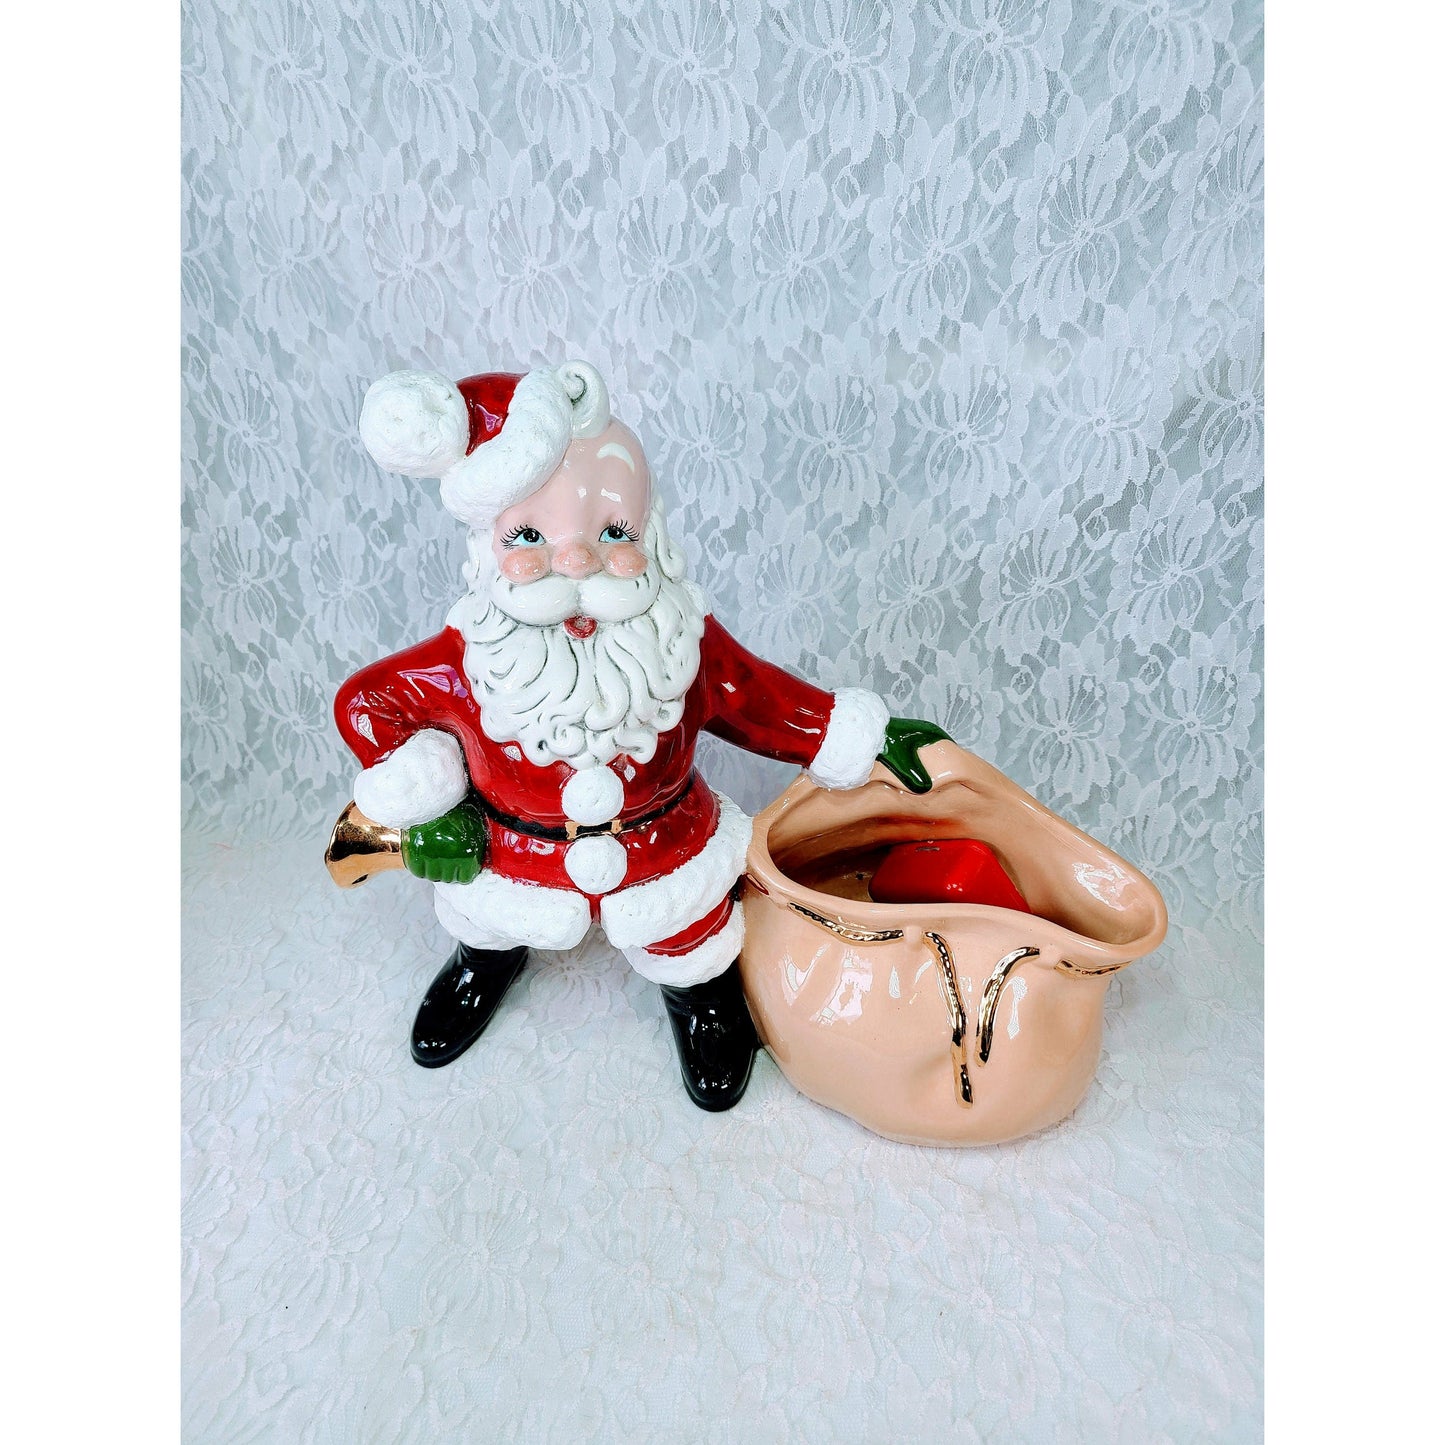 Vintage RARE Large Planter/Music Box Atlantic Mold Ceramic Santa Claus Figure with Music Box Planter USA